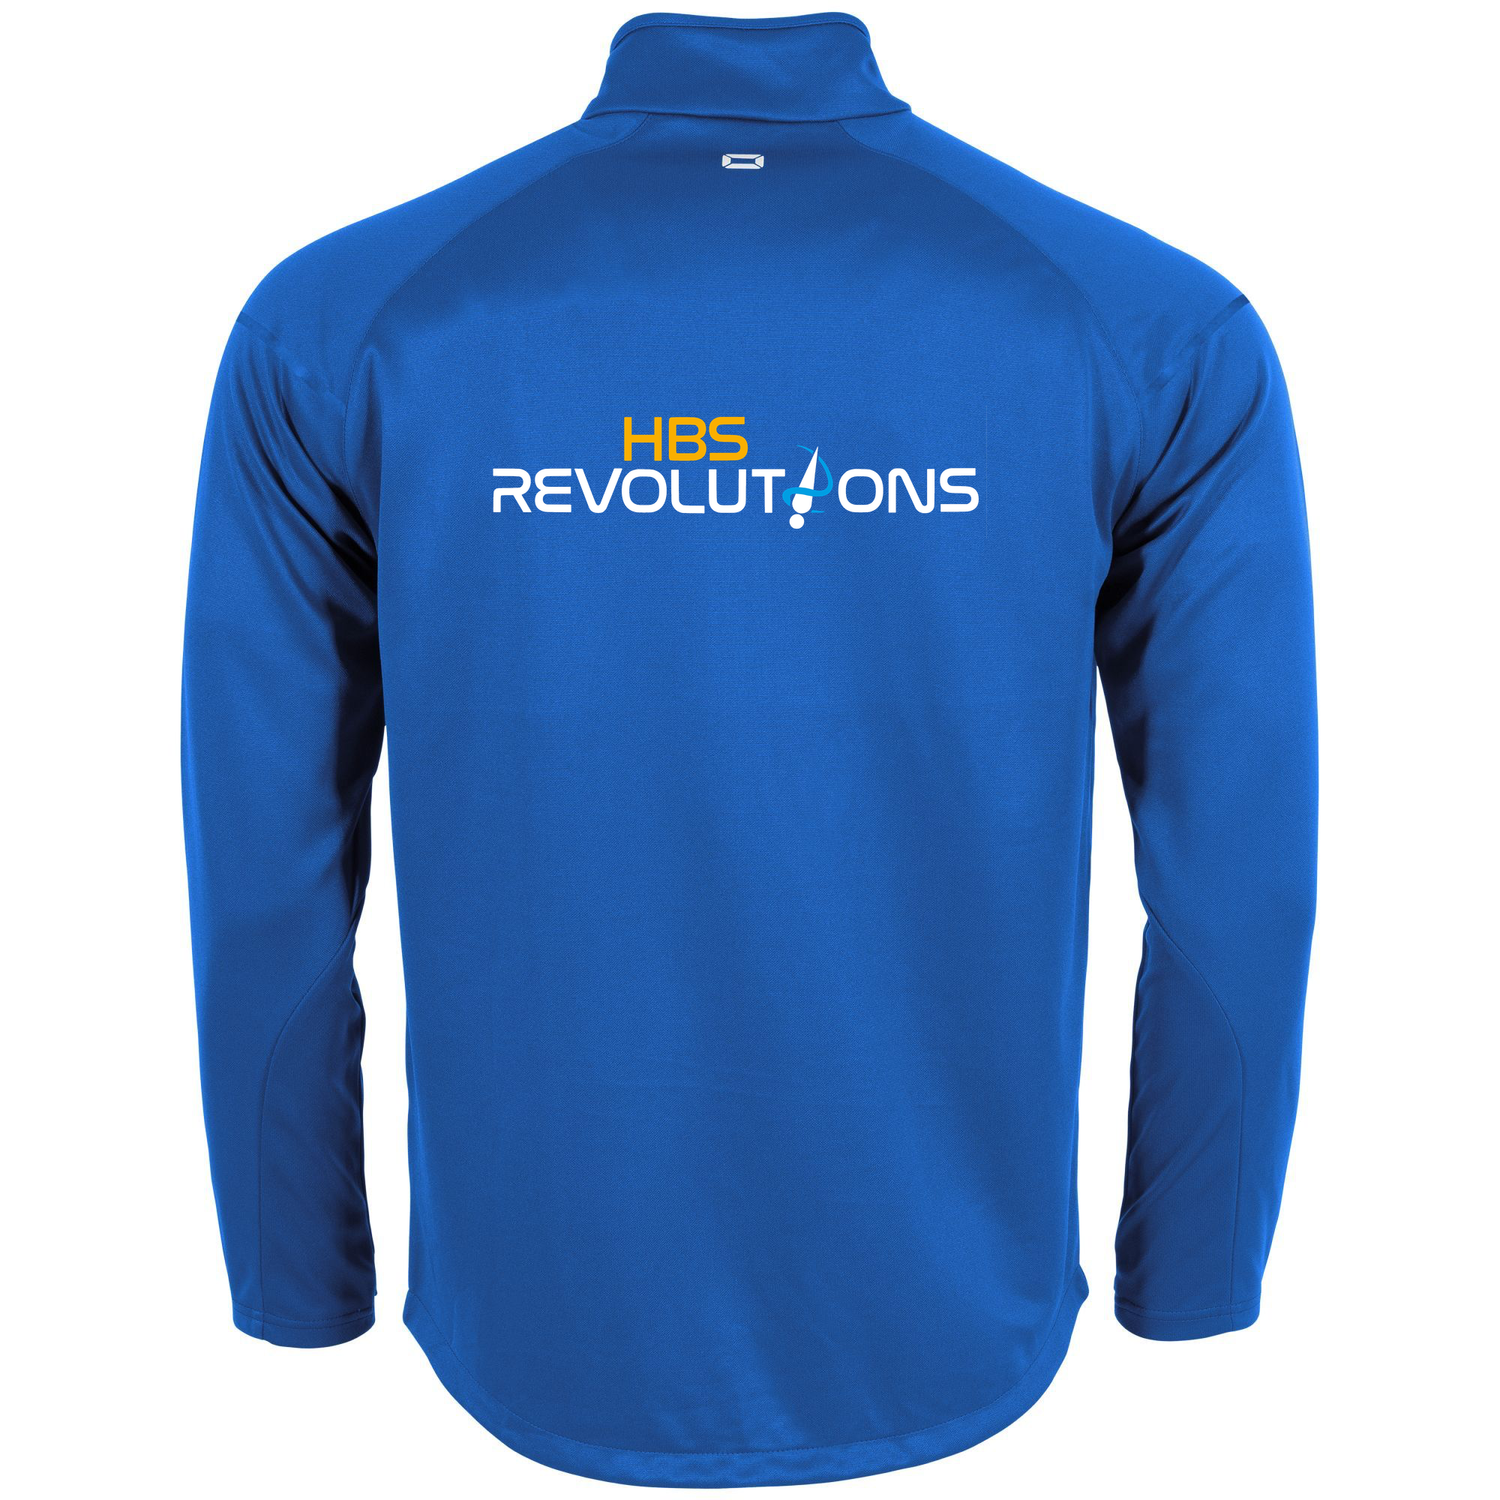 HBS Revolutions Zip Jacket (Senior)